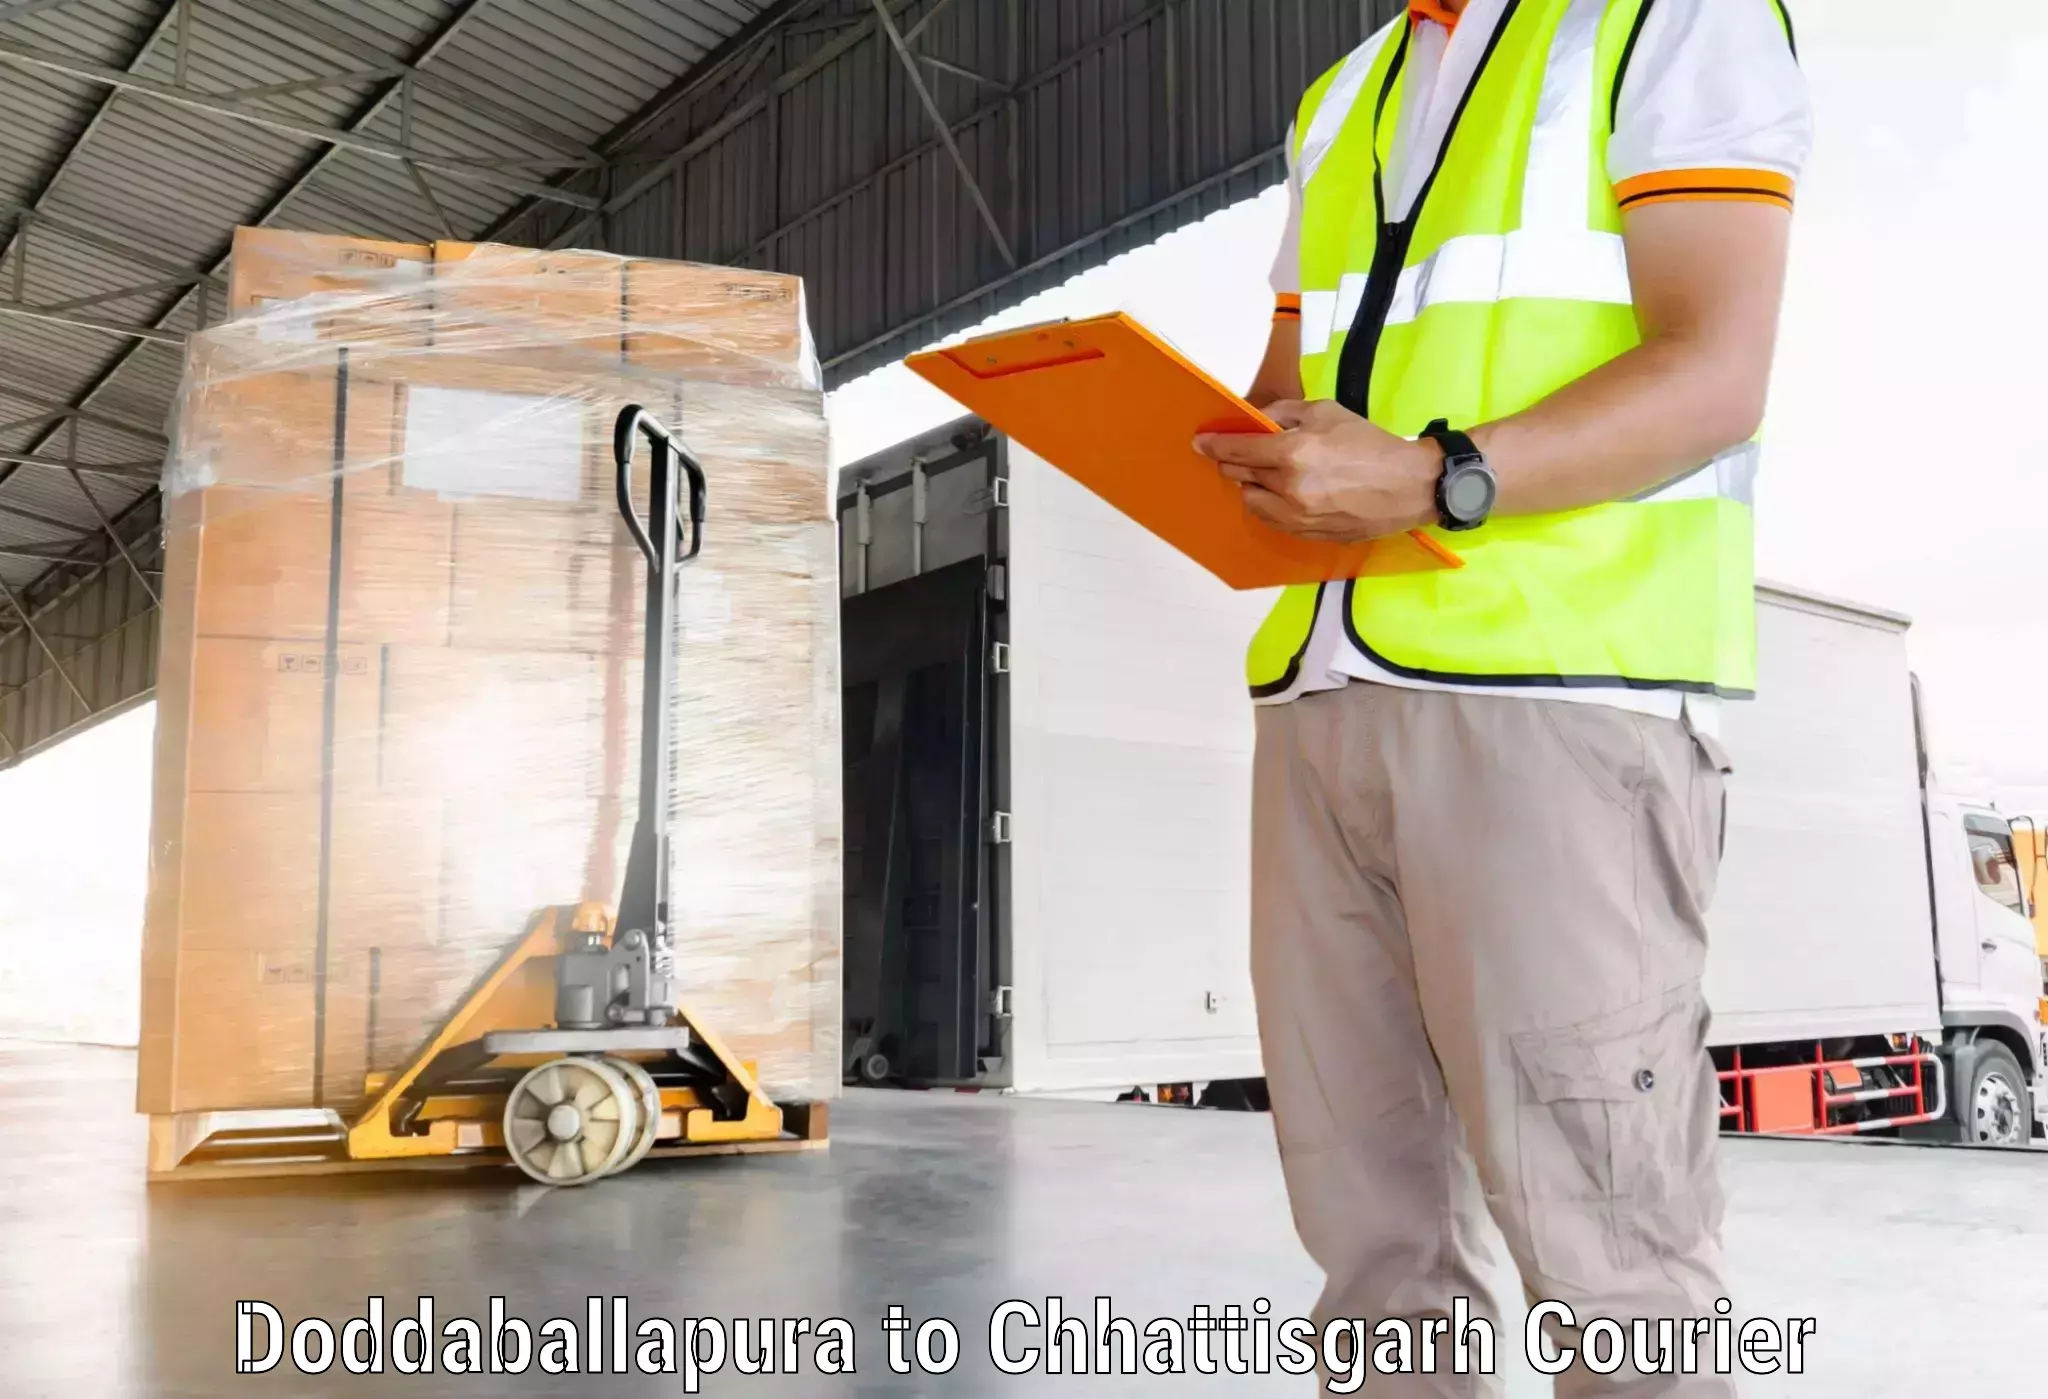 Local delivery service Doddaballapura to Mandhar